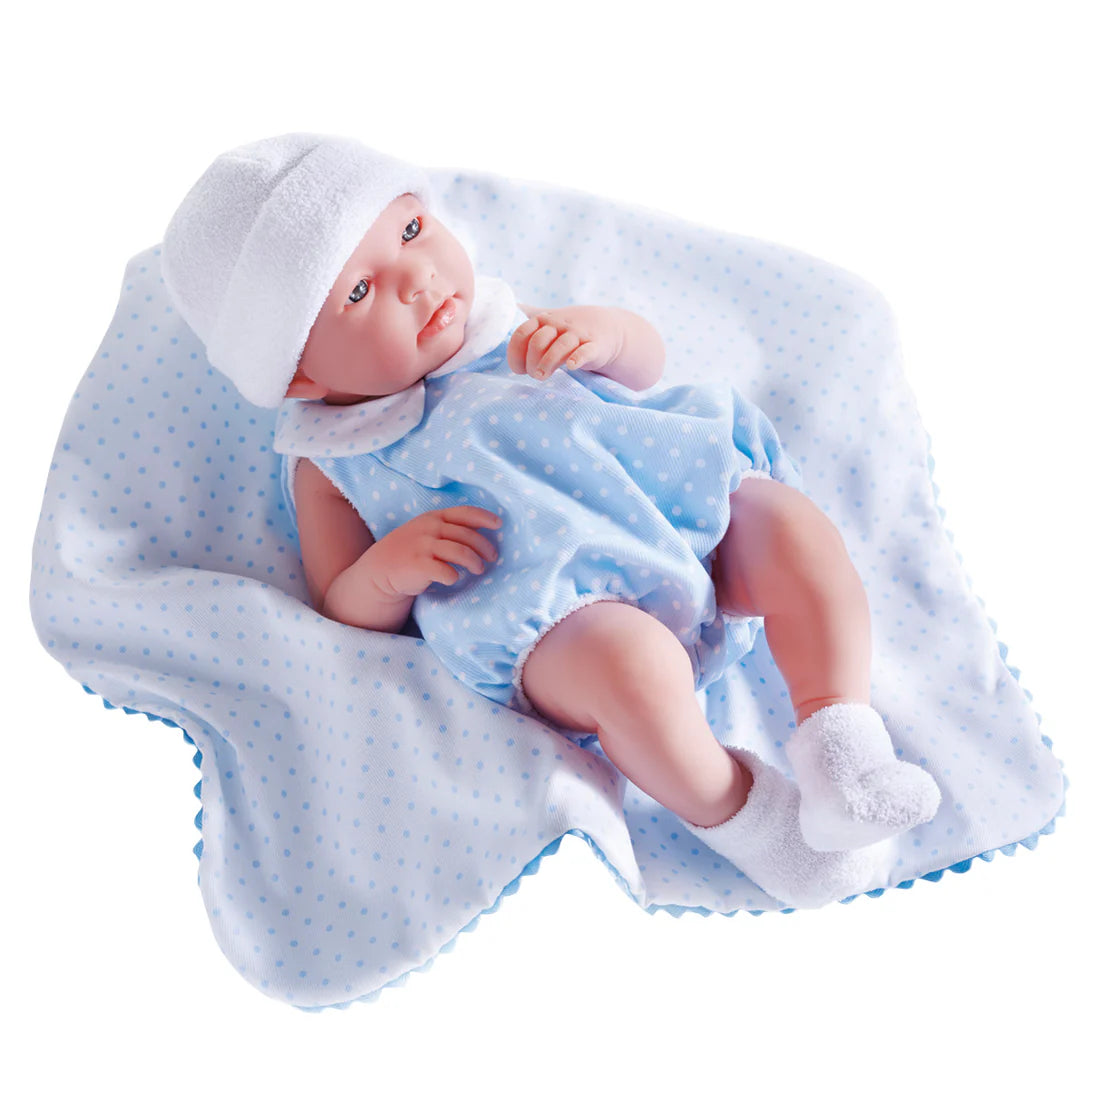 La Newborn All-Vinyl Real Boy Baby Doll-Blue Bubble Suit &amp; Blanket